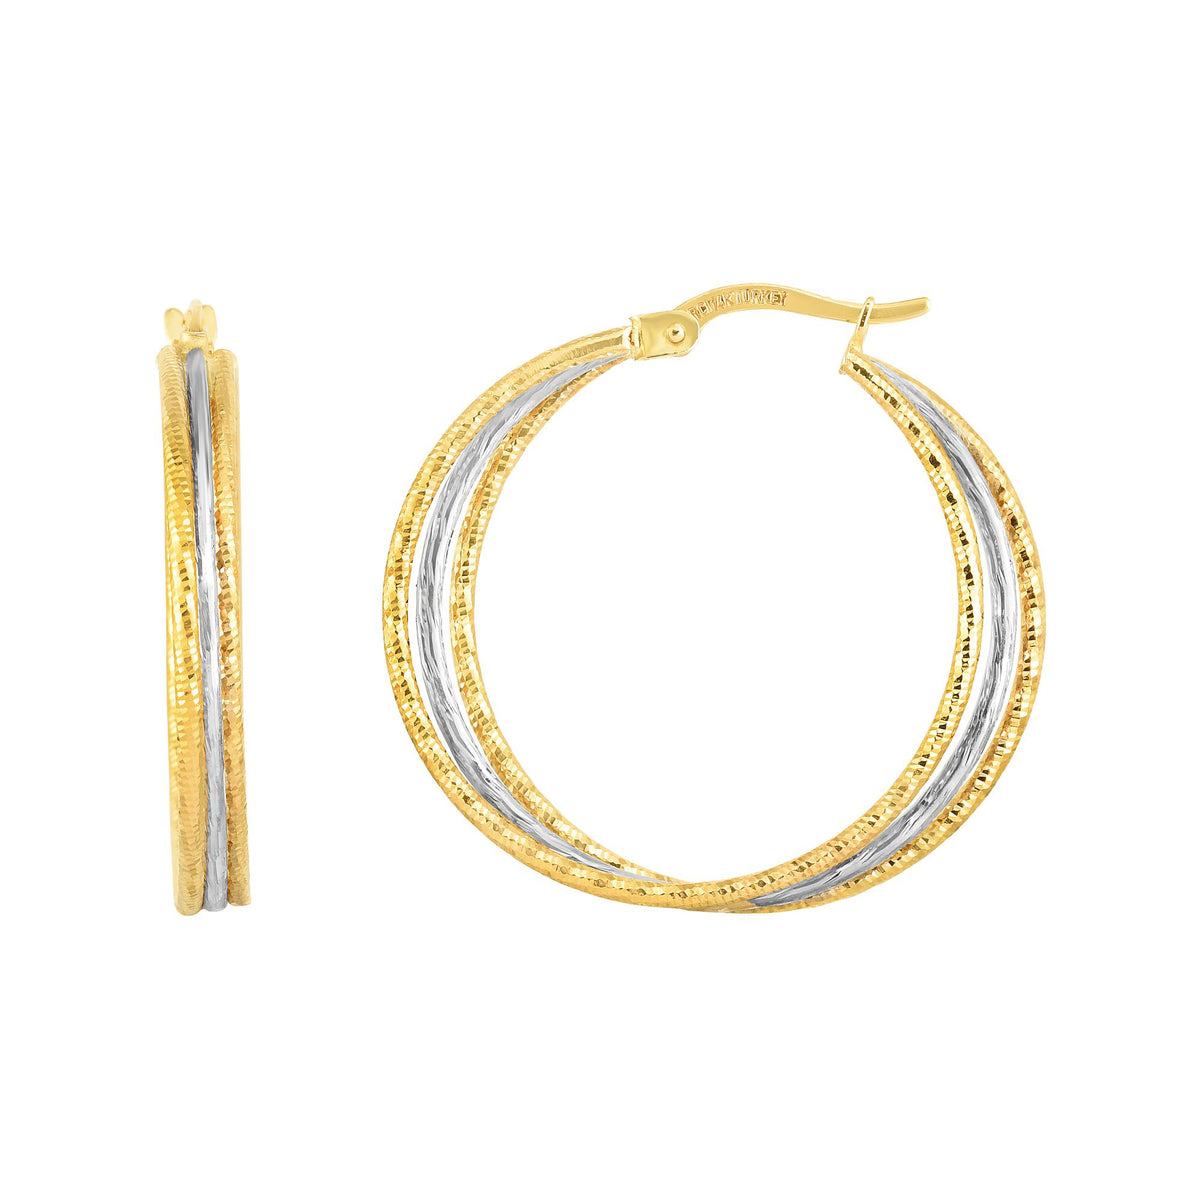 14K Gold Yellow And White Finish Hoop Earrings, Diameter 30mm